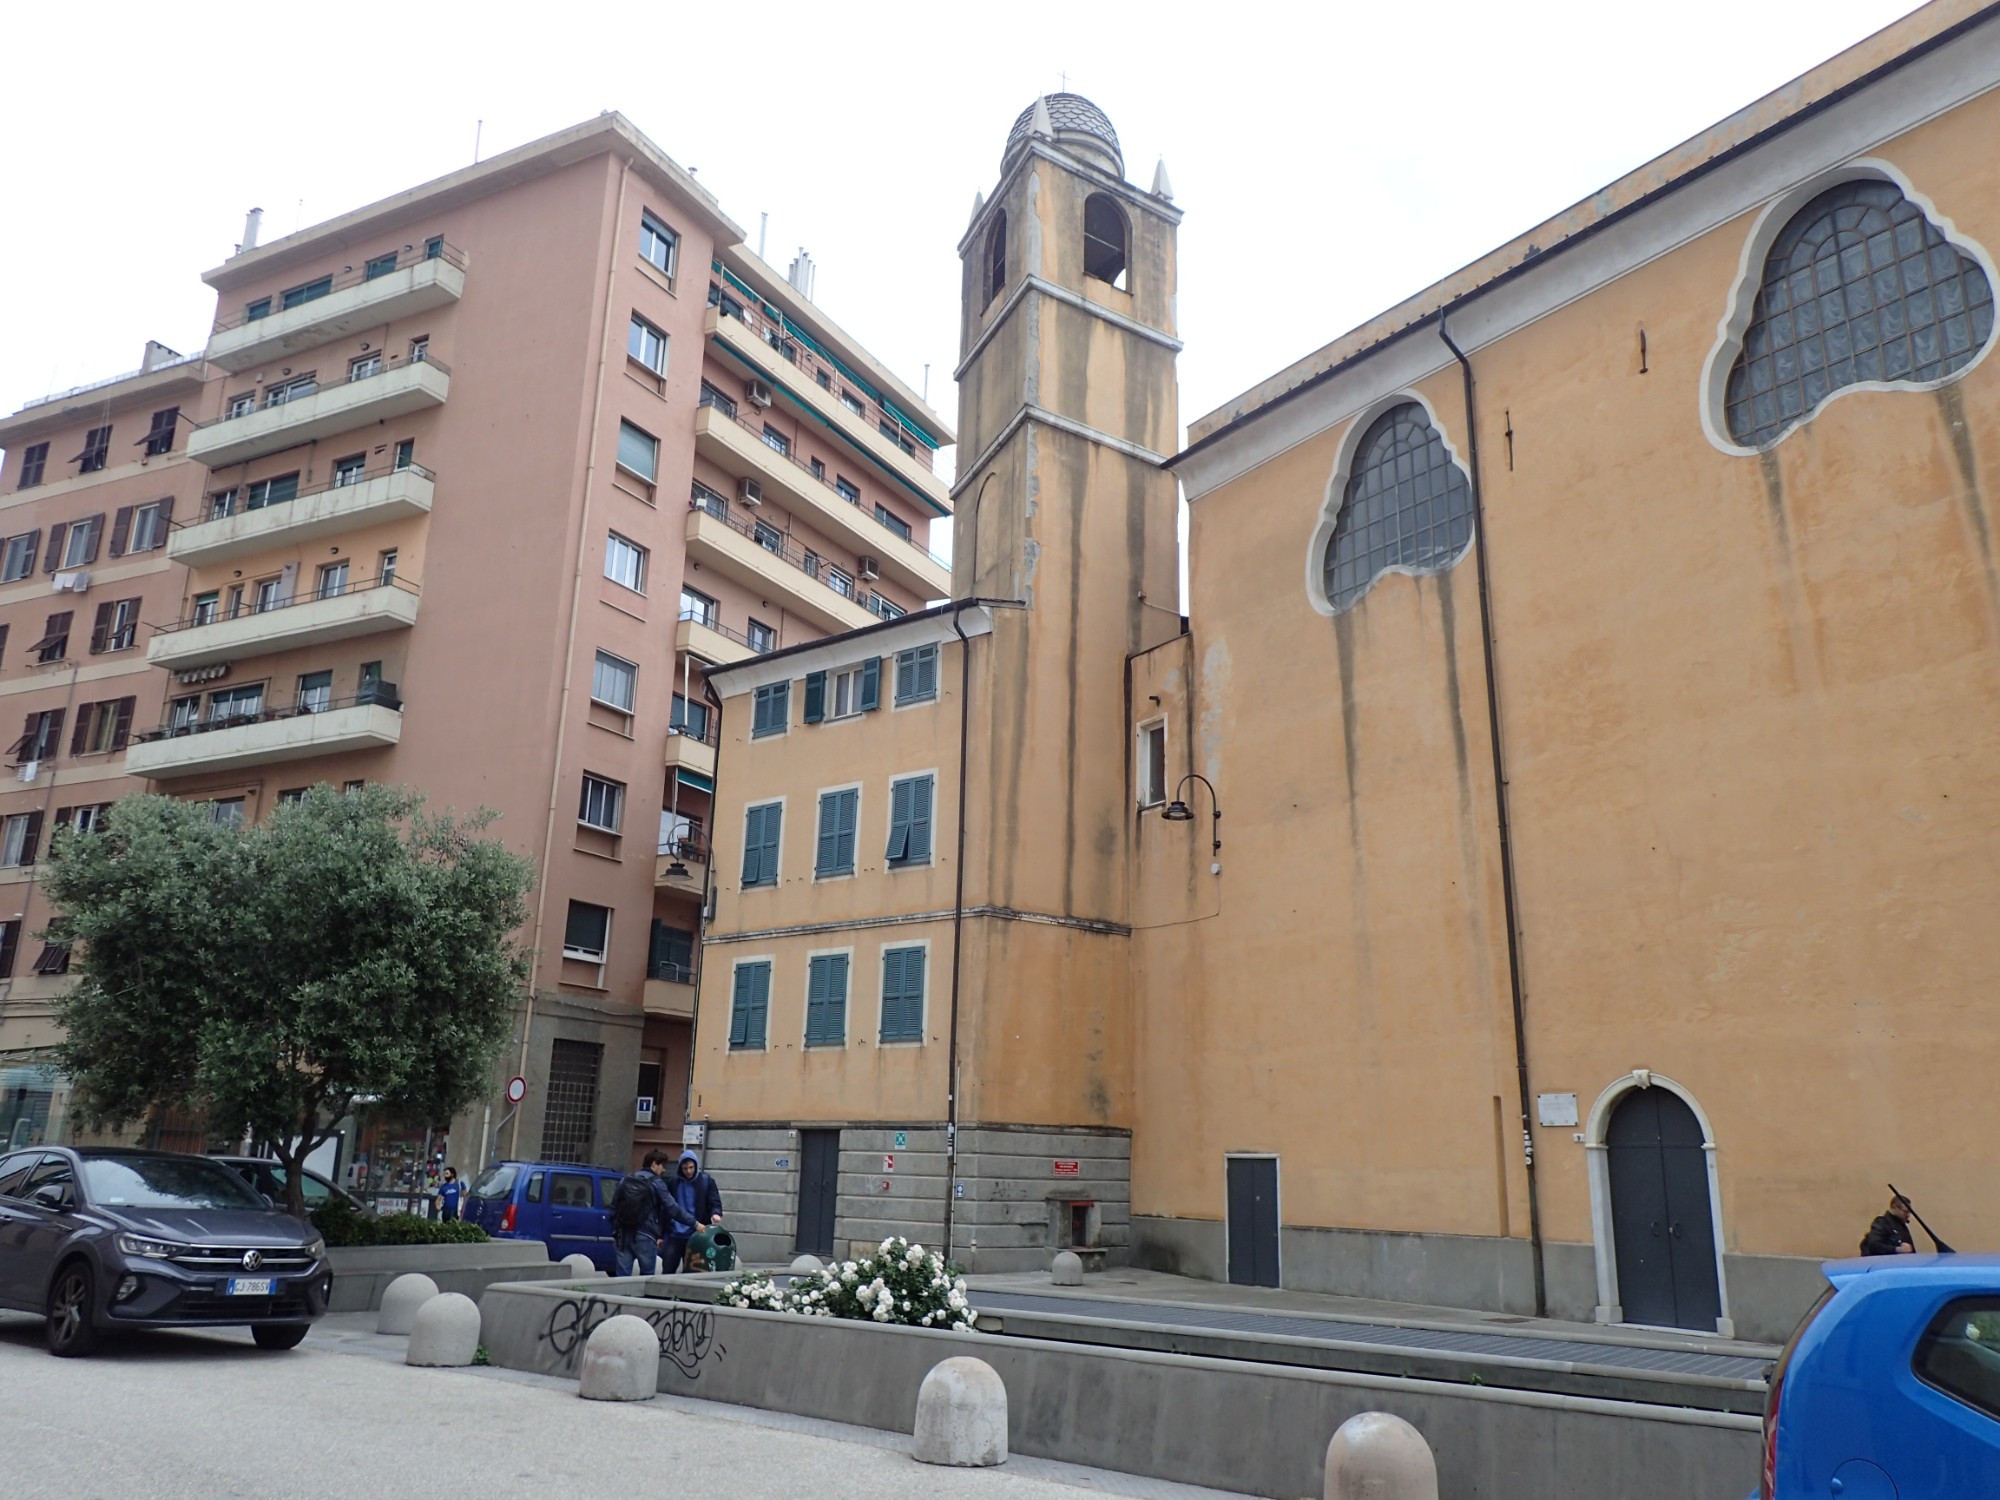 Chiesa Sant Agostino, Italy